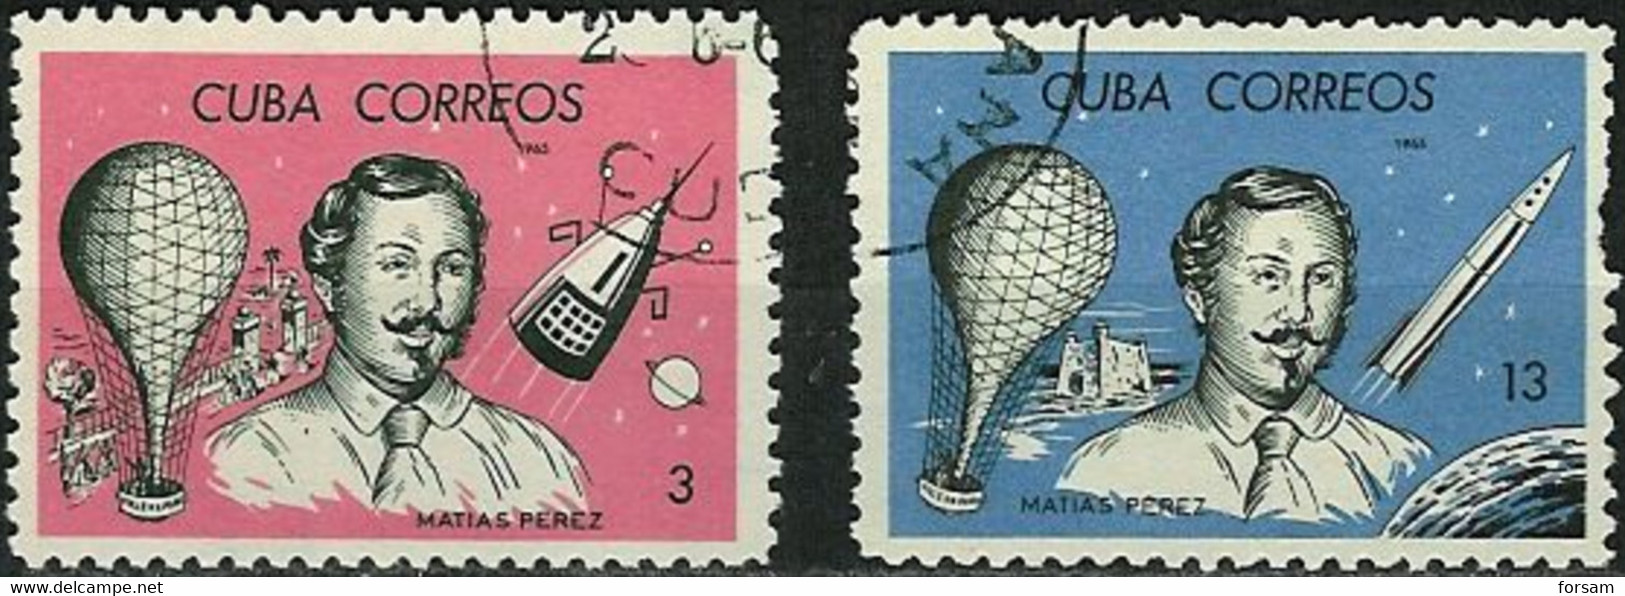 CUBA..1965...Michel # 1033-1034...used...MiCV - 2.20 Euro. - Usati